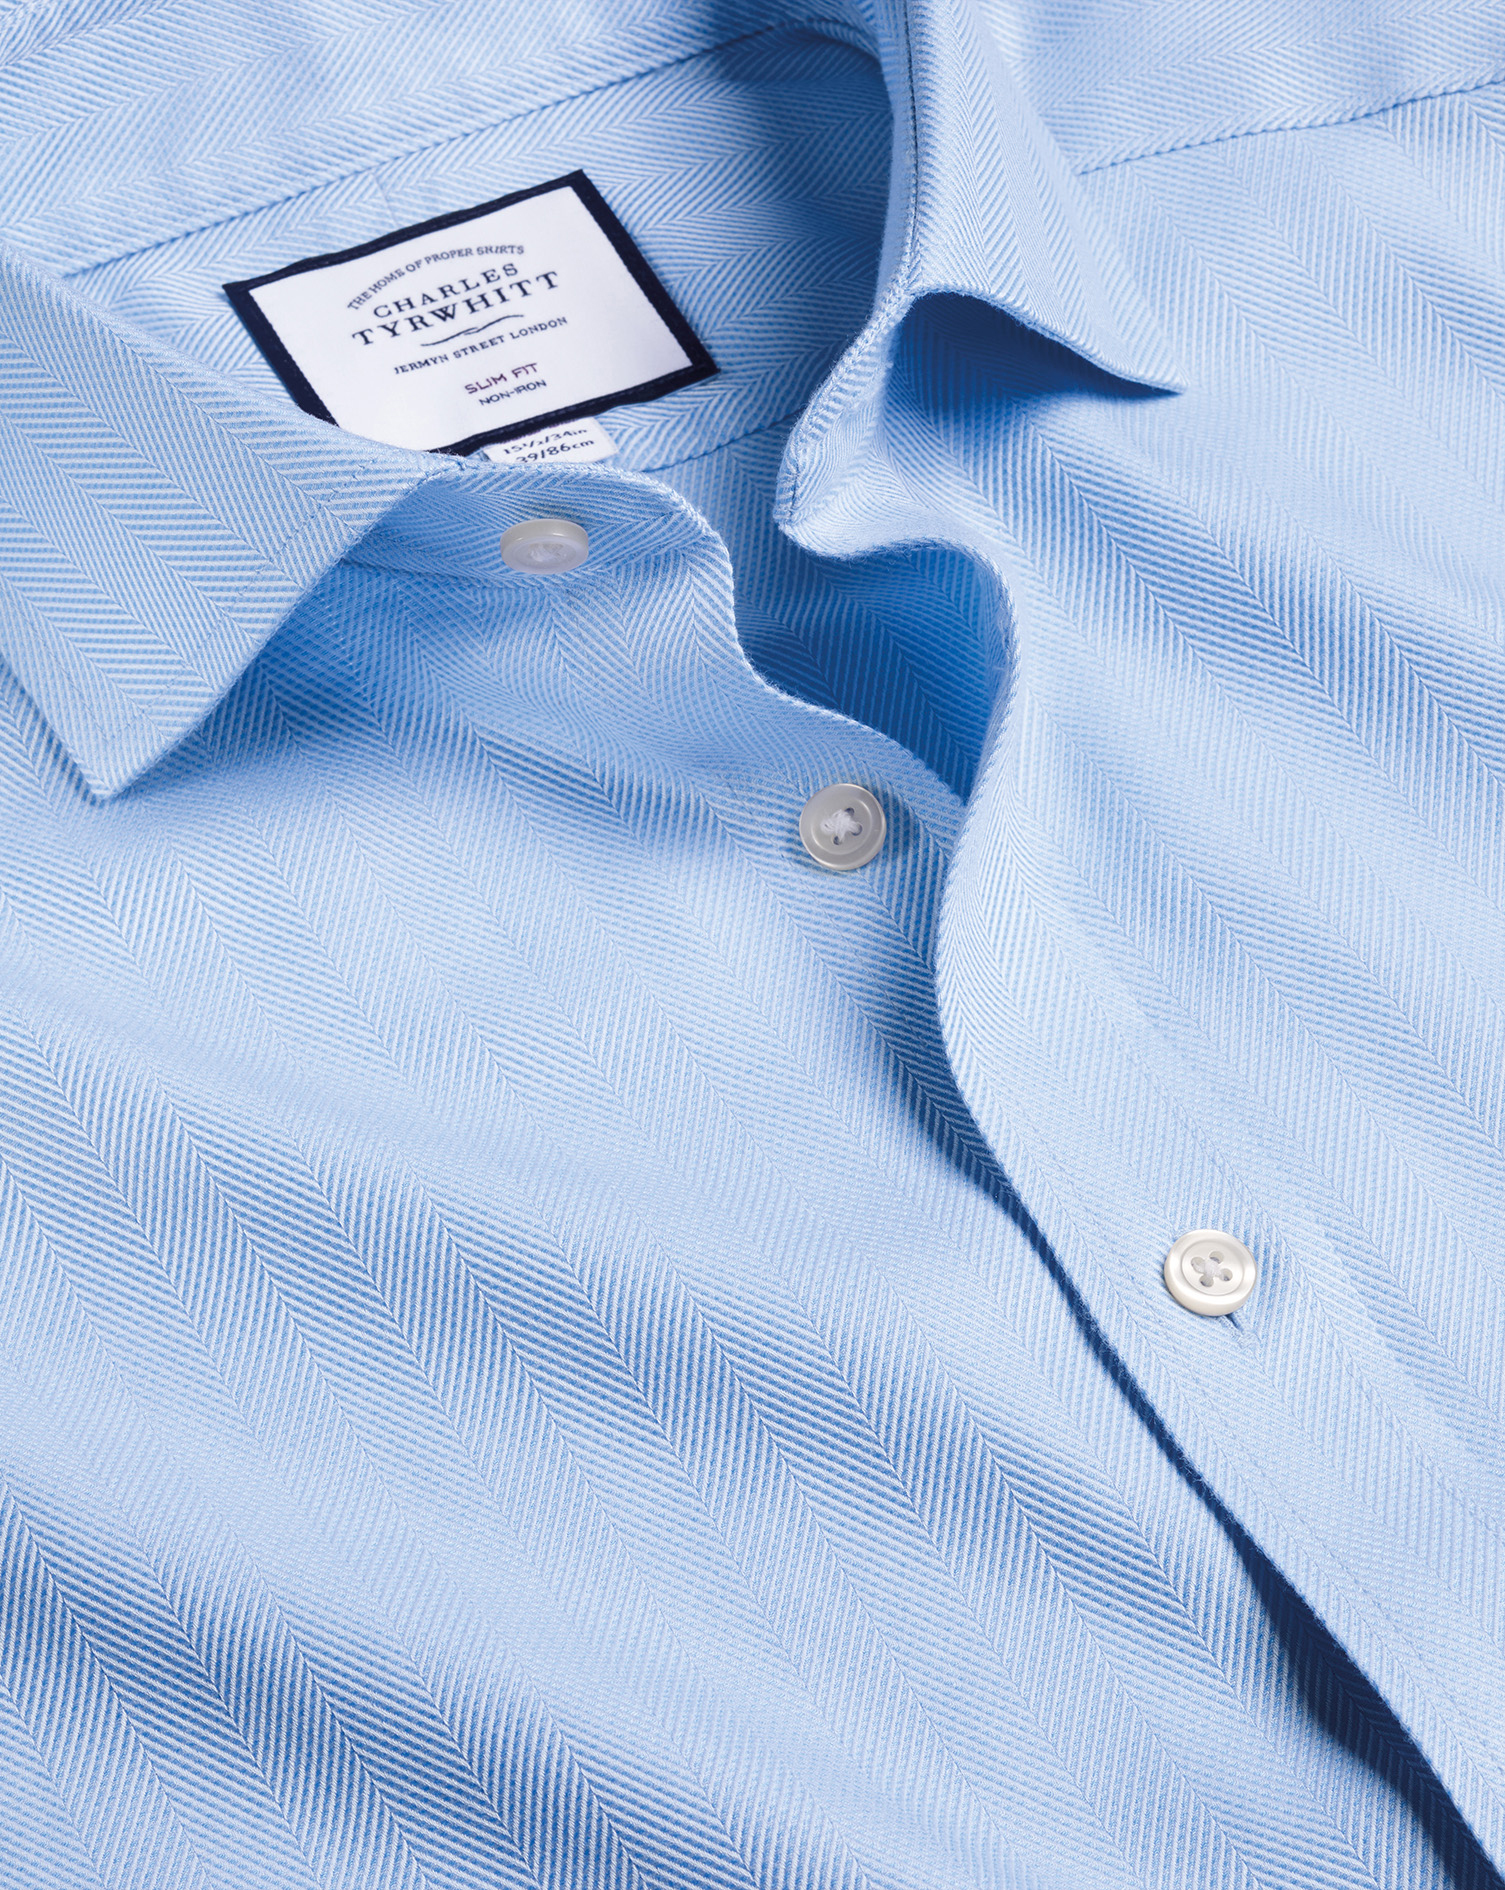 Men's Charles Tyrwhitt Cutaway Collar Non-Iron Herringbone Dress Shirt - Sky Blue Single Cuff Size S